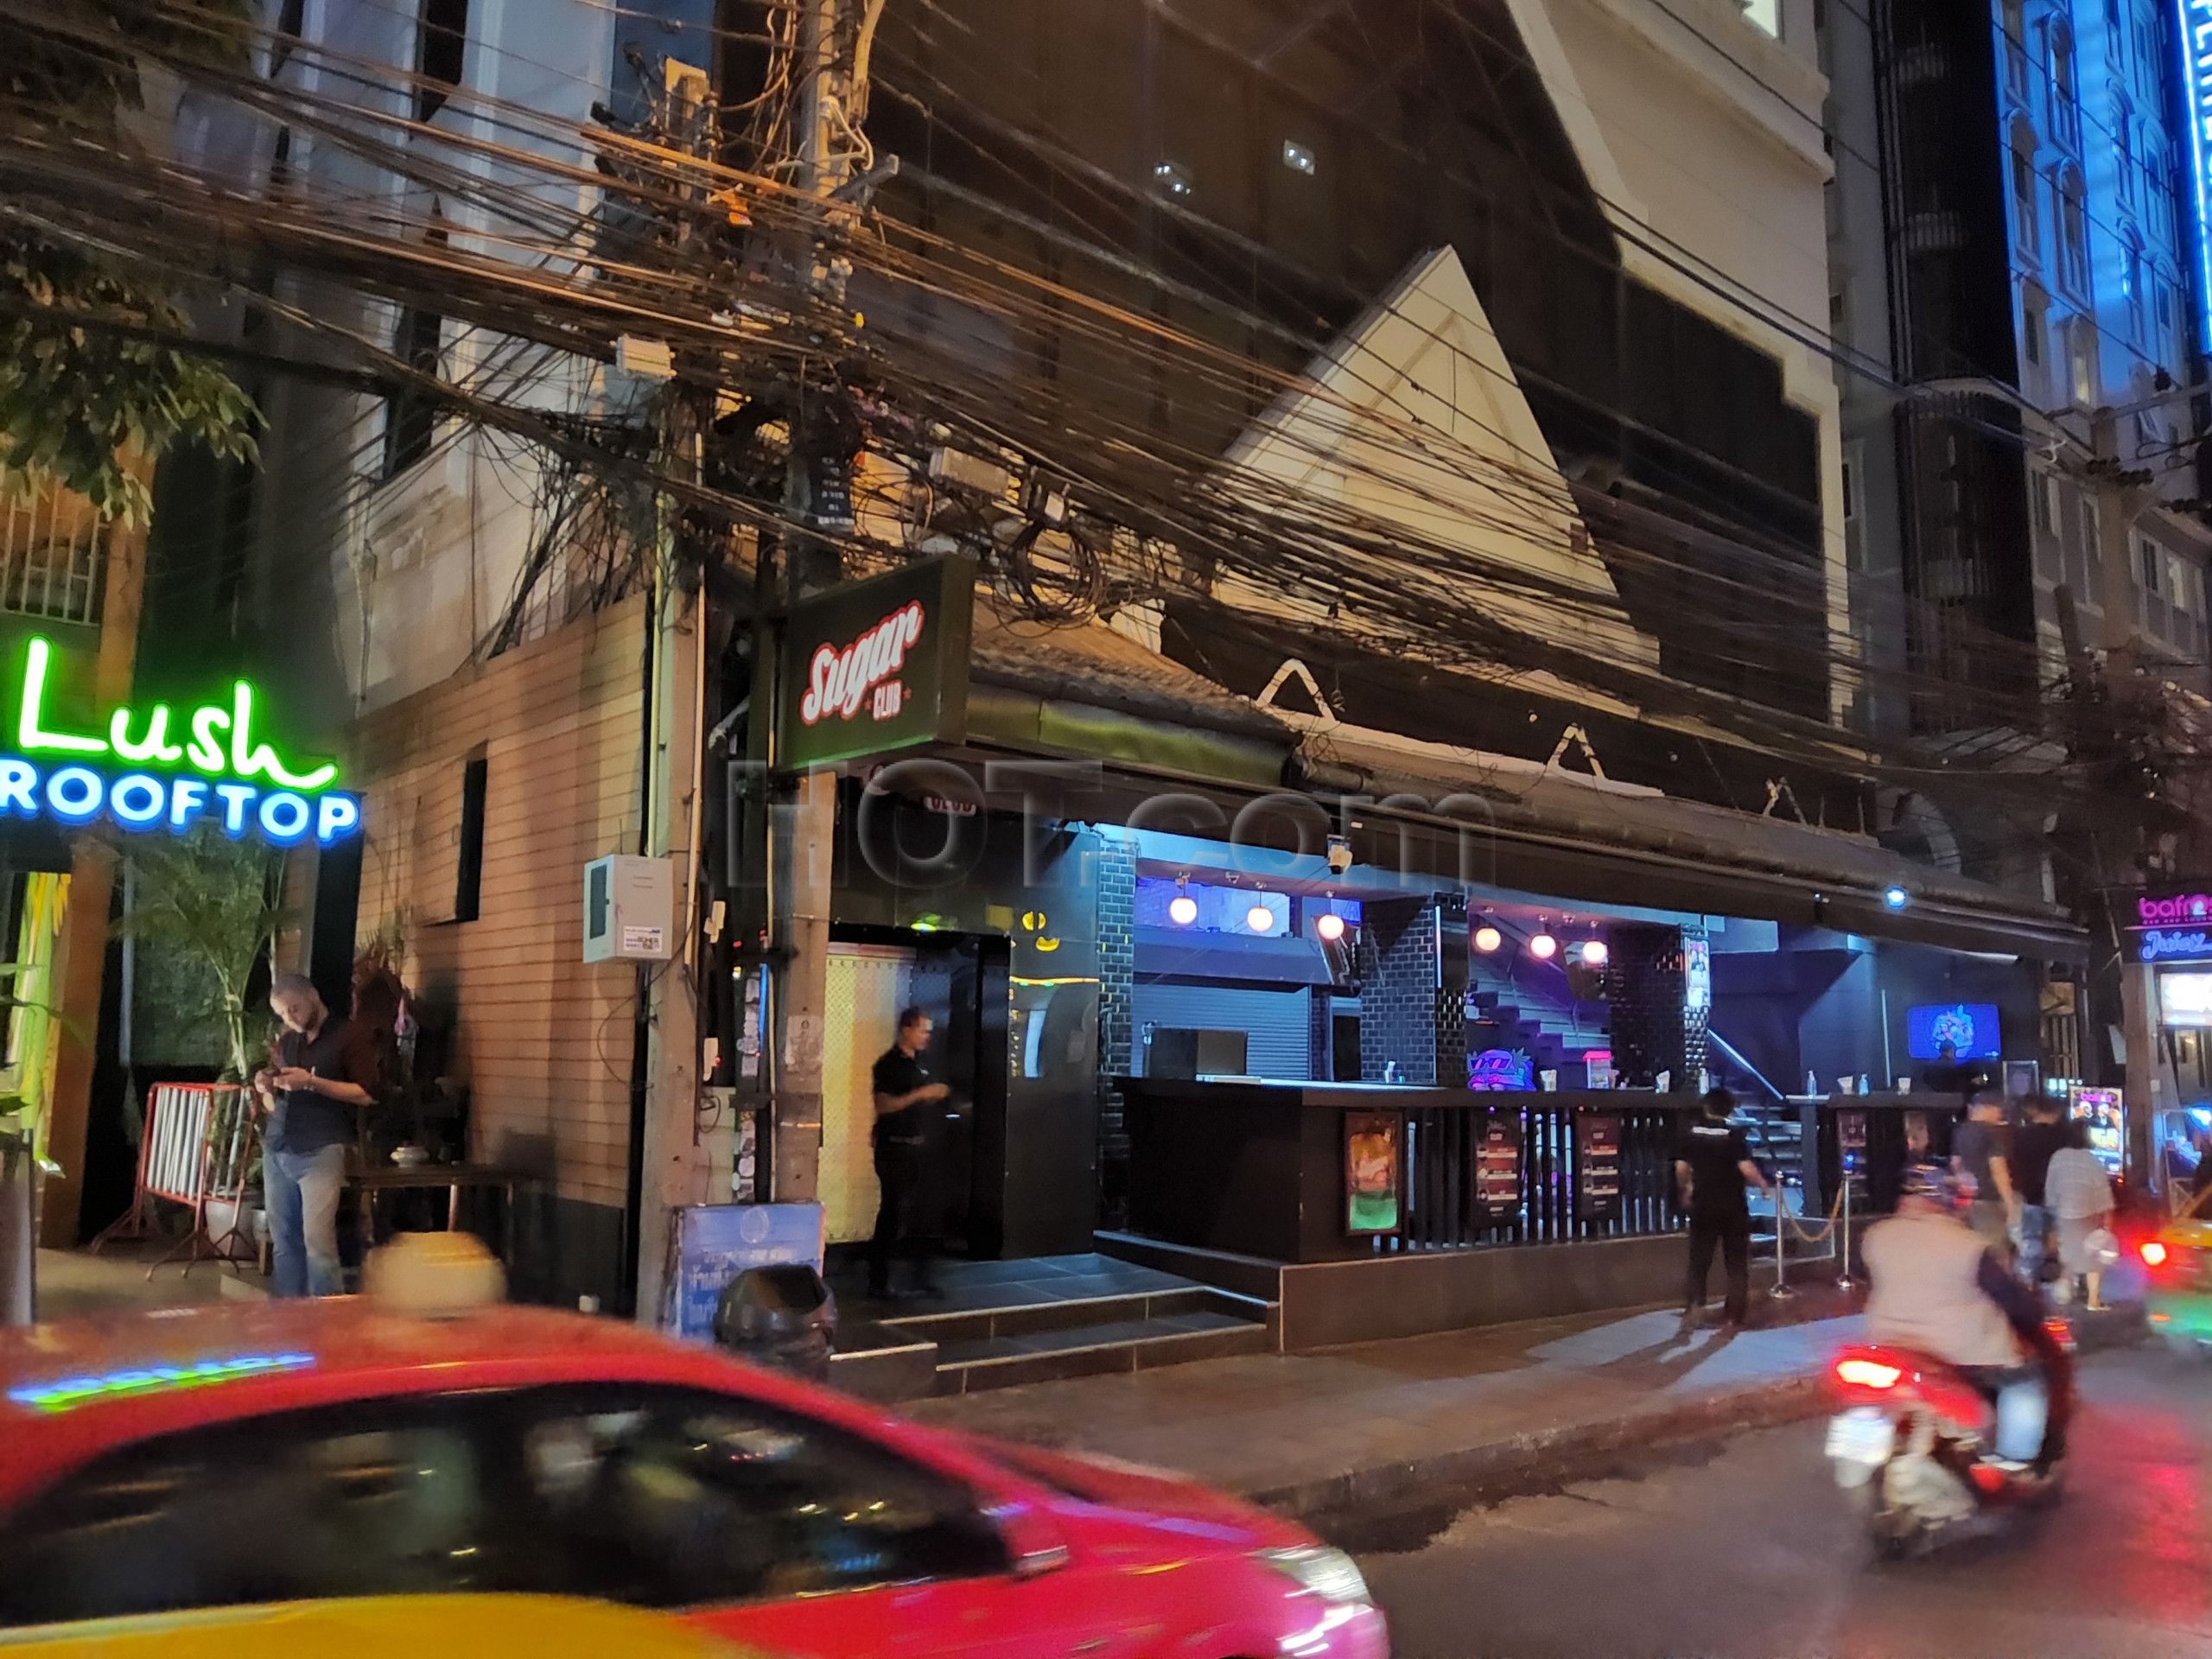 Bangkok, Thailand Sugar Club